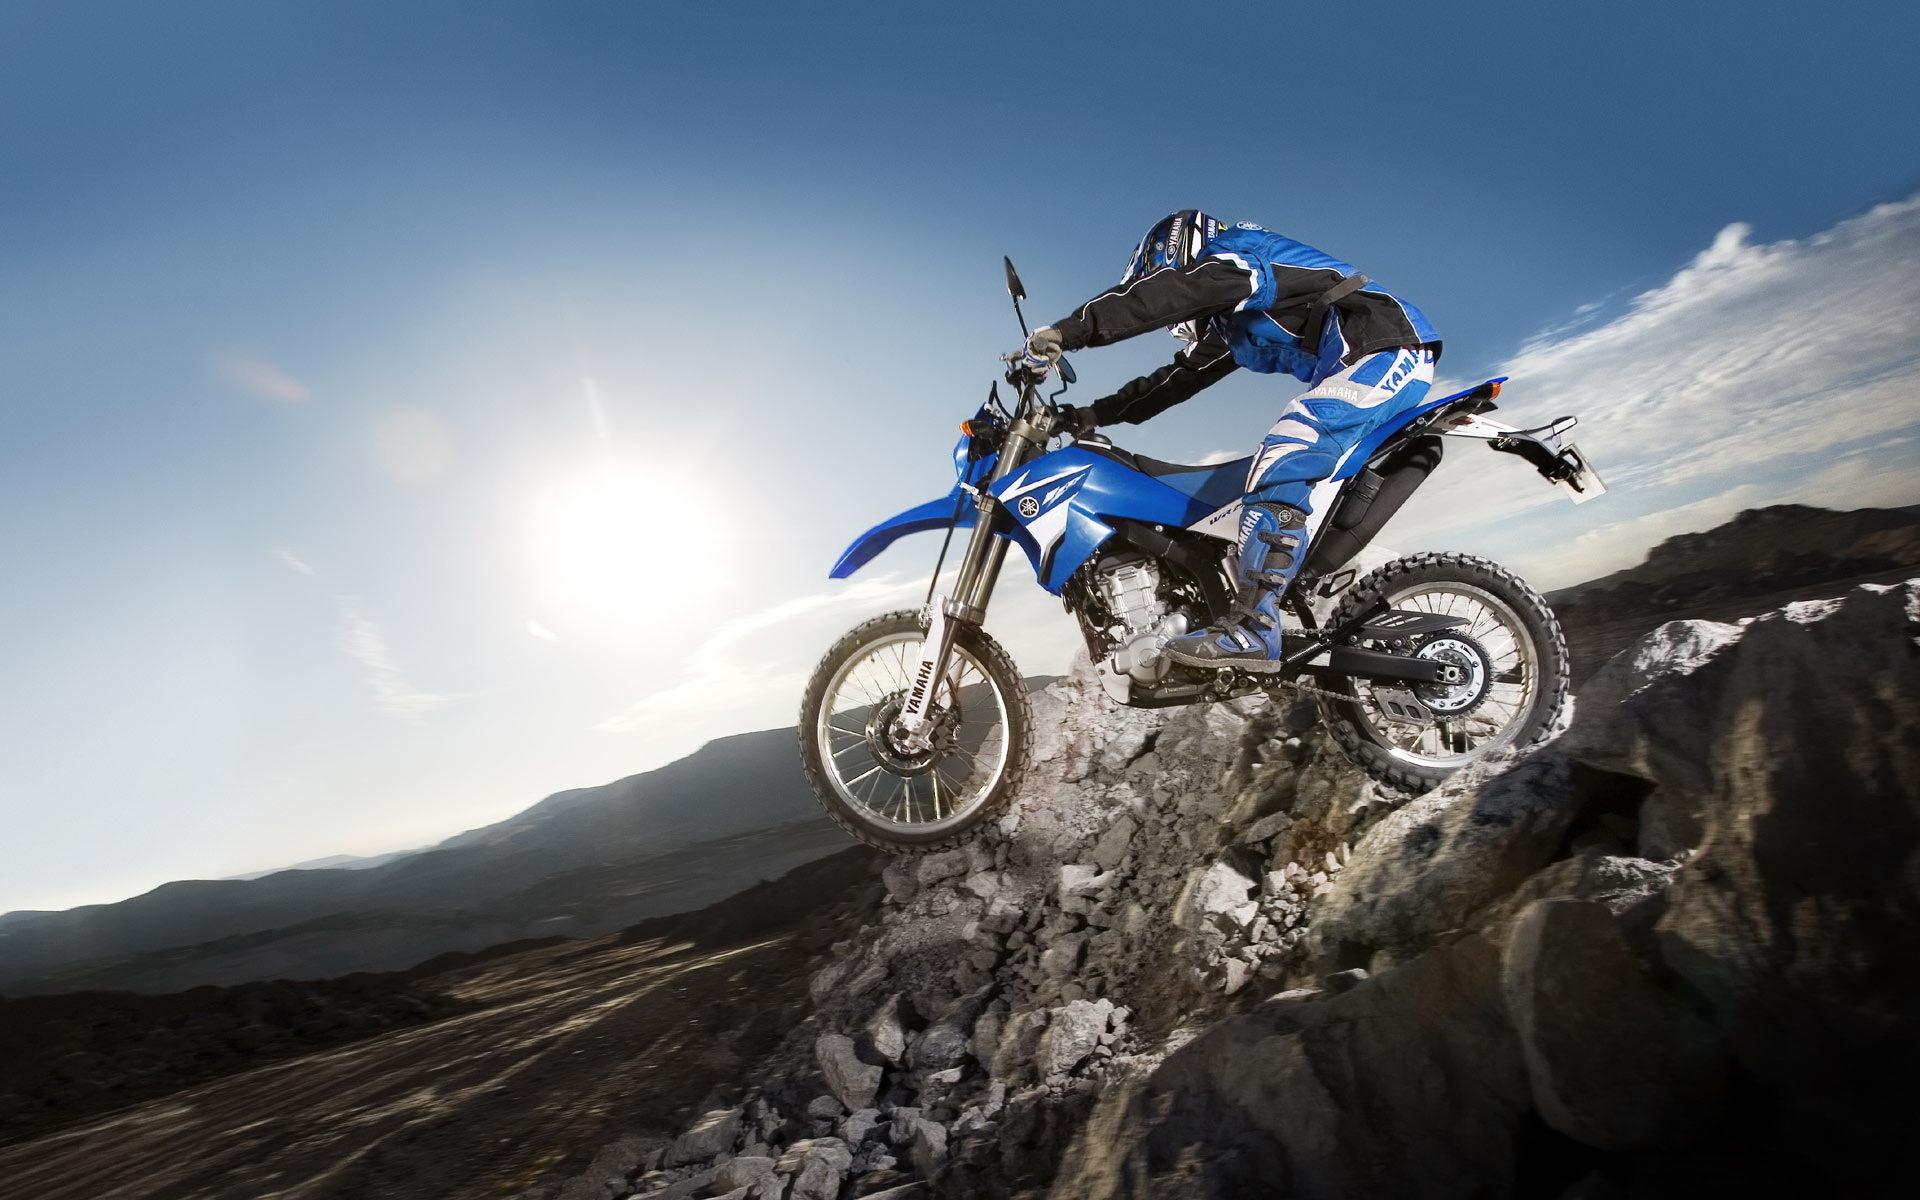 Wallpaper Man Riding Motocross Dirt Bike on Brown Sand Background   Download Free Image